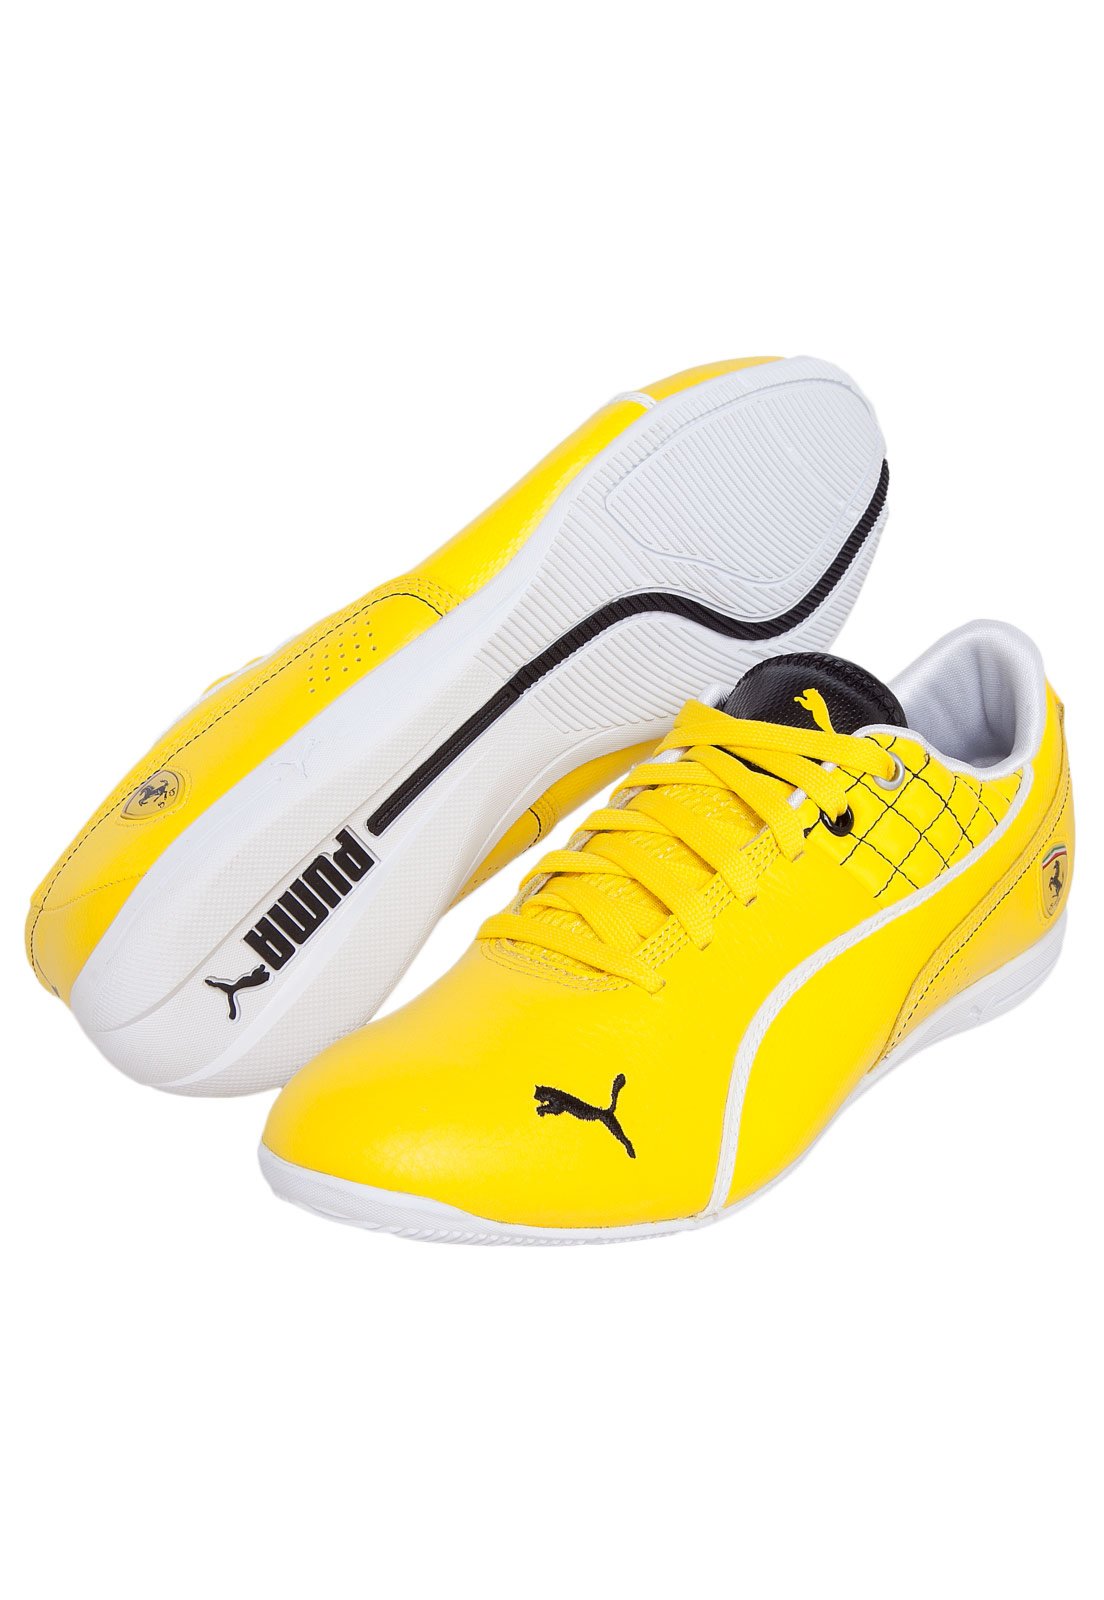 tenis puma amarelo masculino